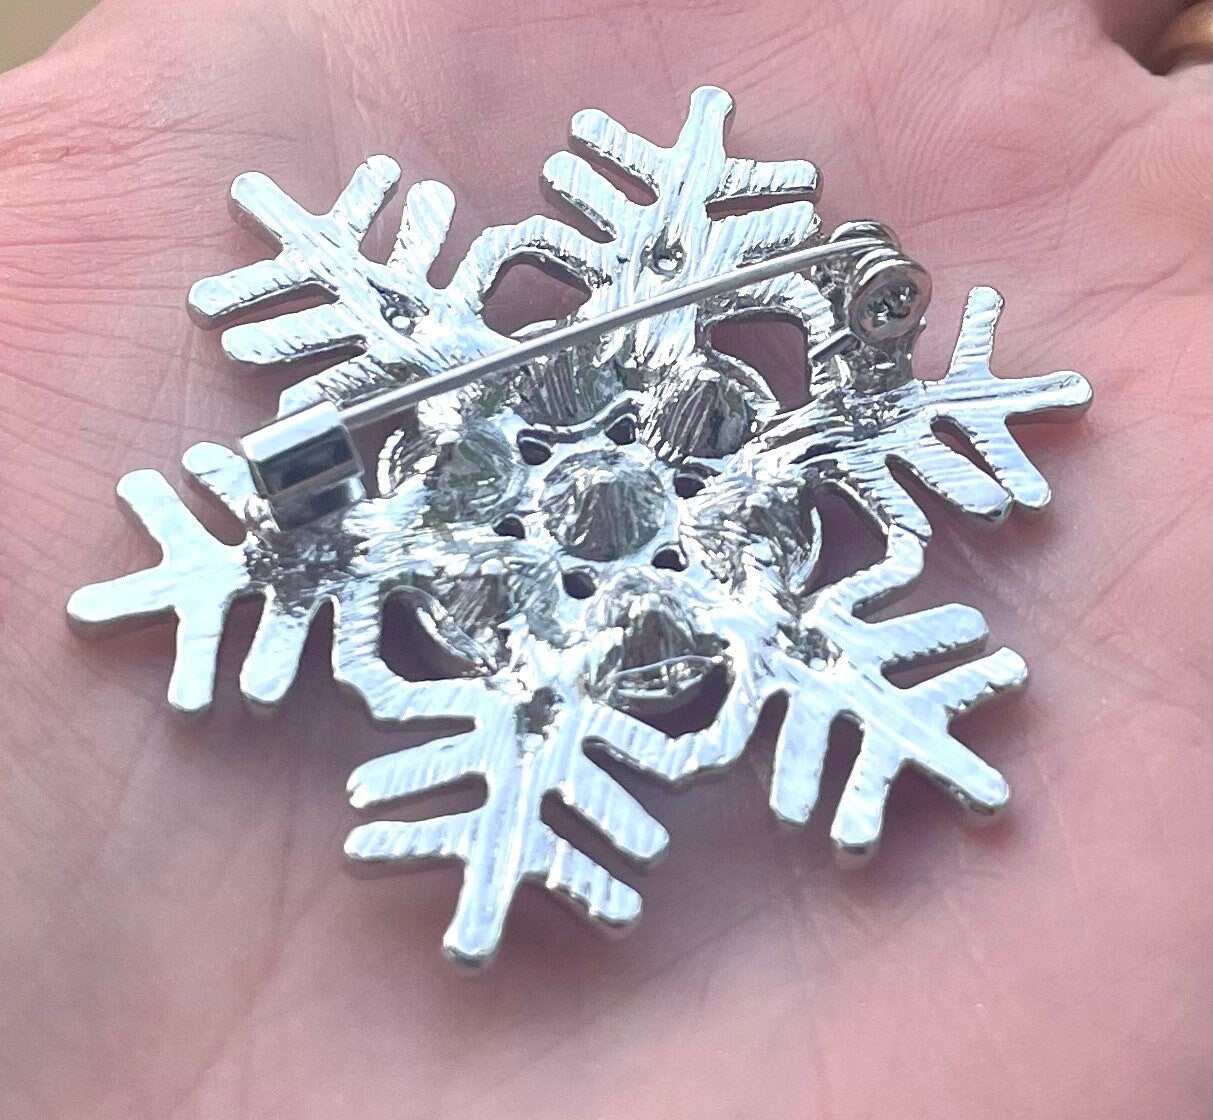 Snowflake rhinestone brooch